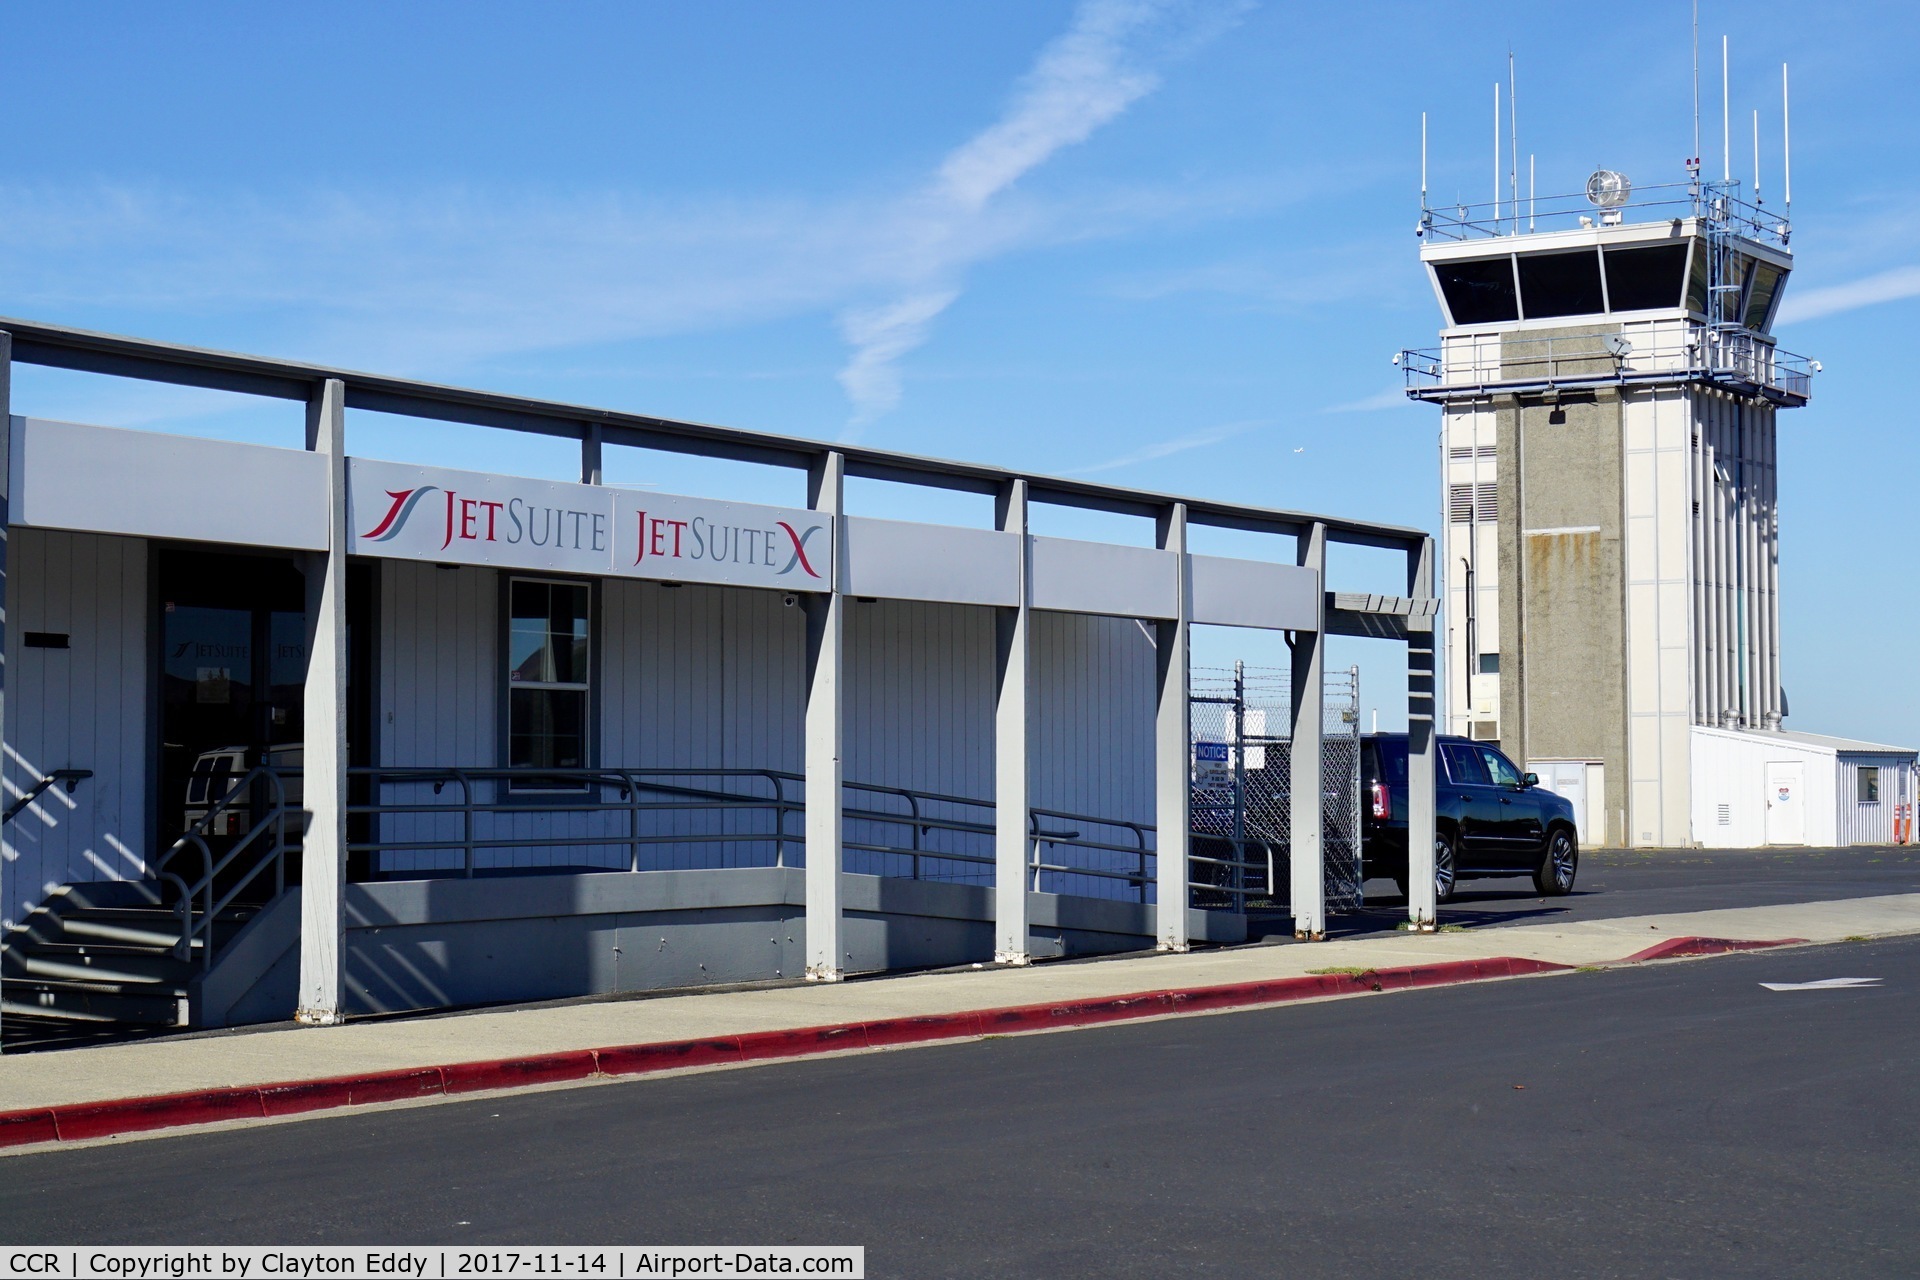 Buchanan Field Airport (CCR) - JetSuite terminal building at Buchanan Field. 2017.